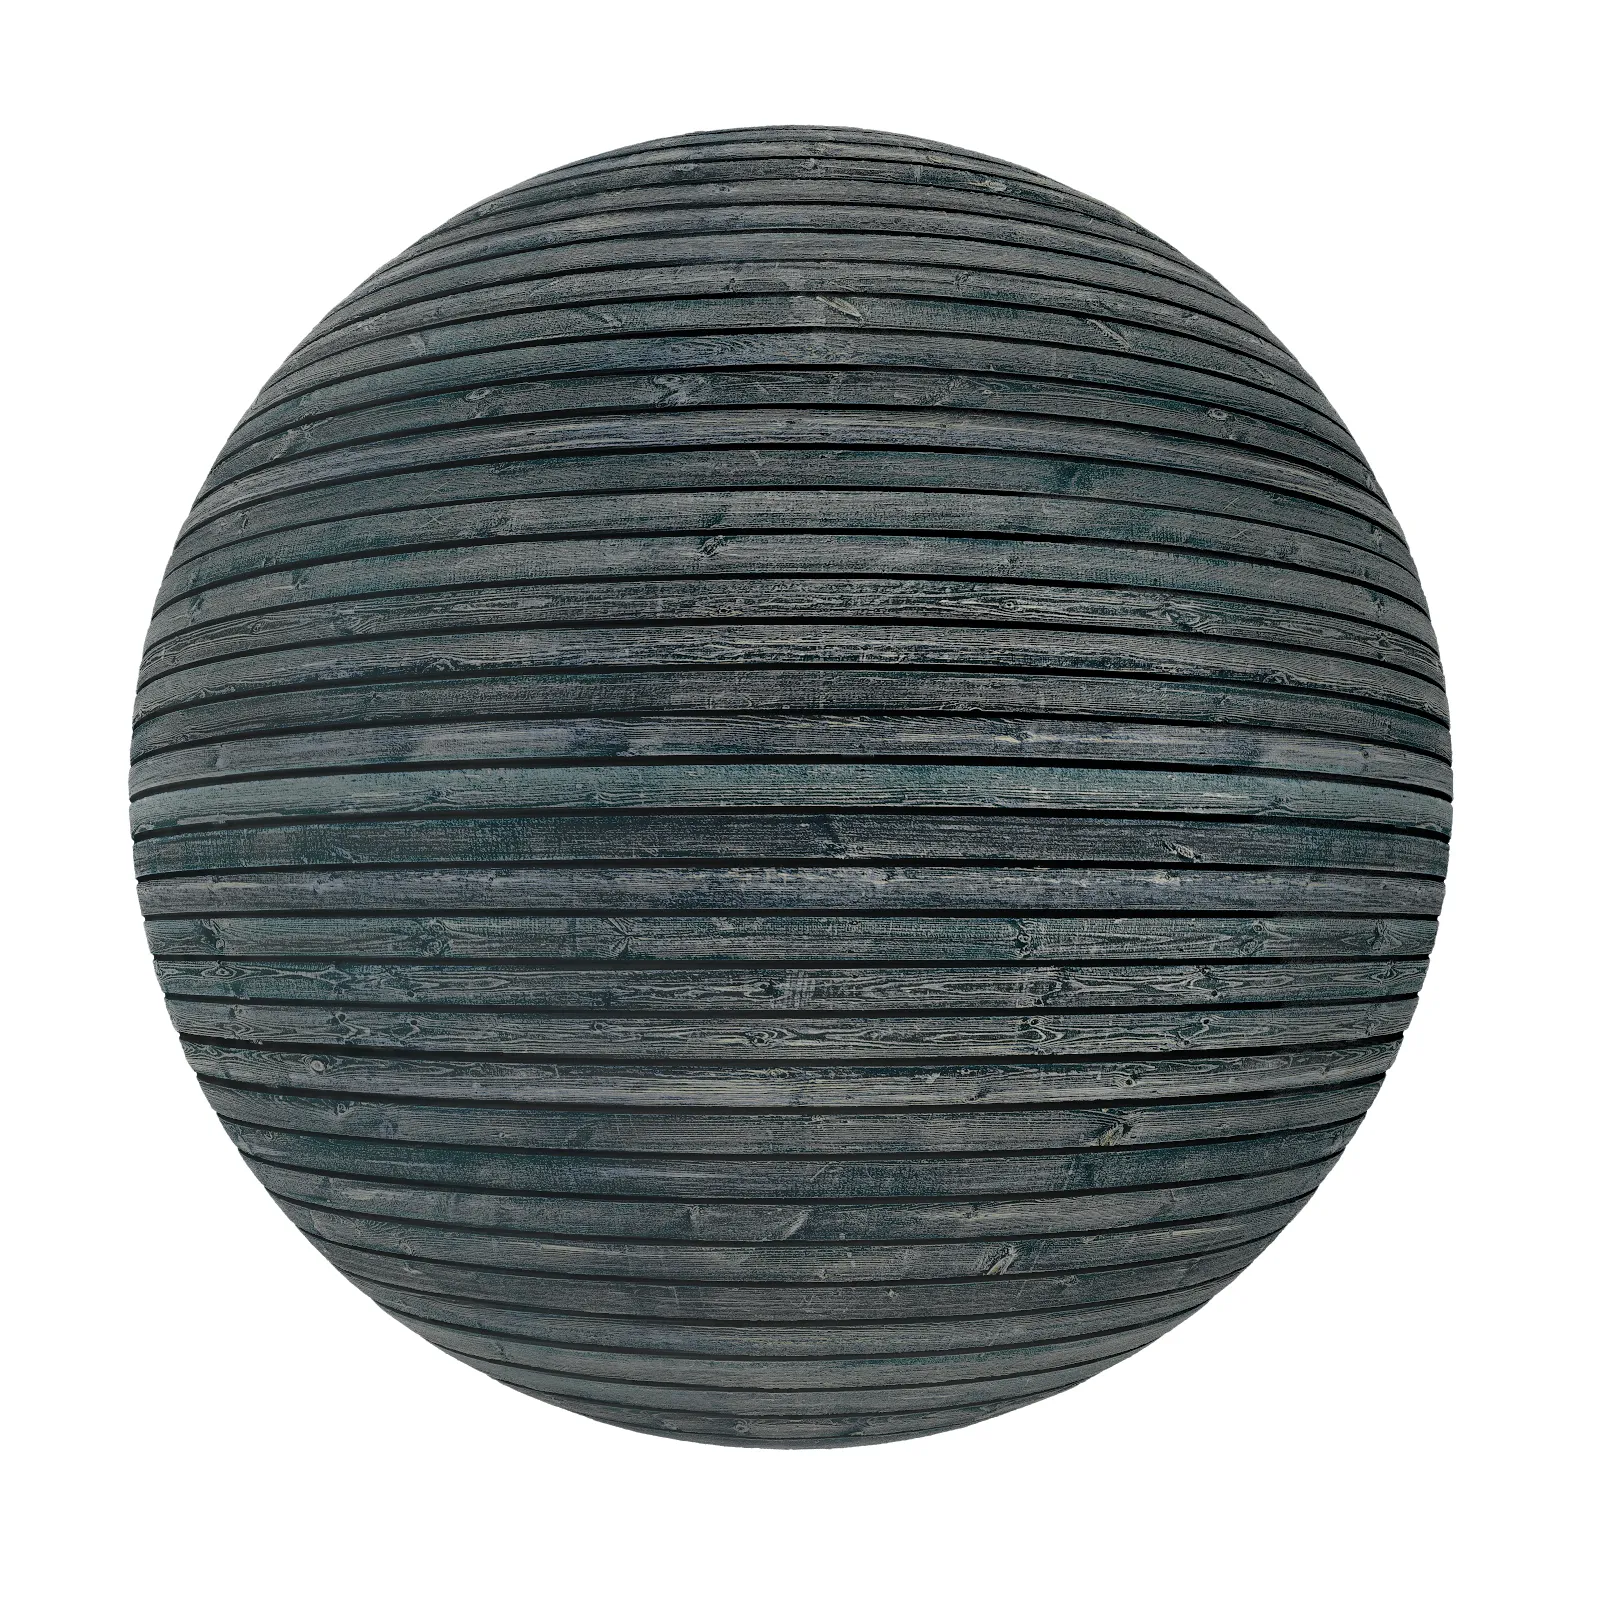 3ds Max Files – Texture – 8 – Wood Texture – 122 – Wood Texture by Minh Nguyen.